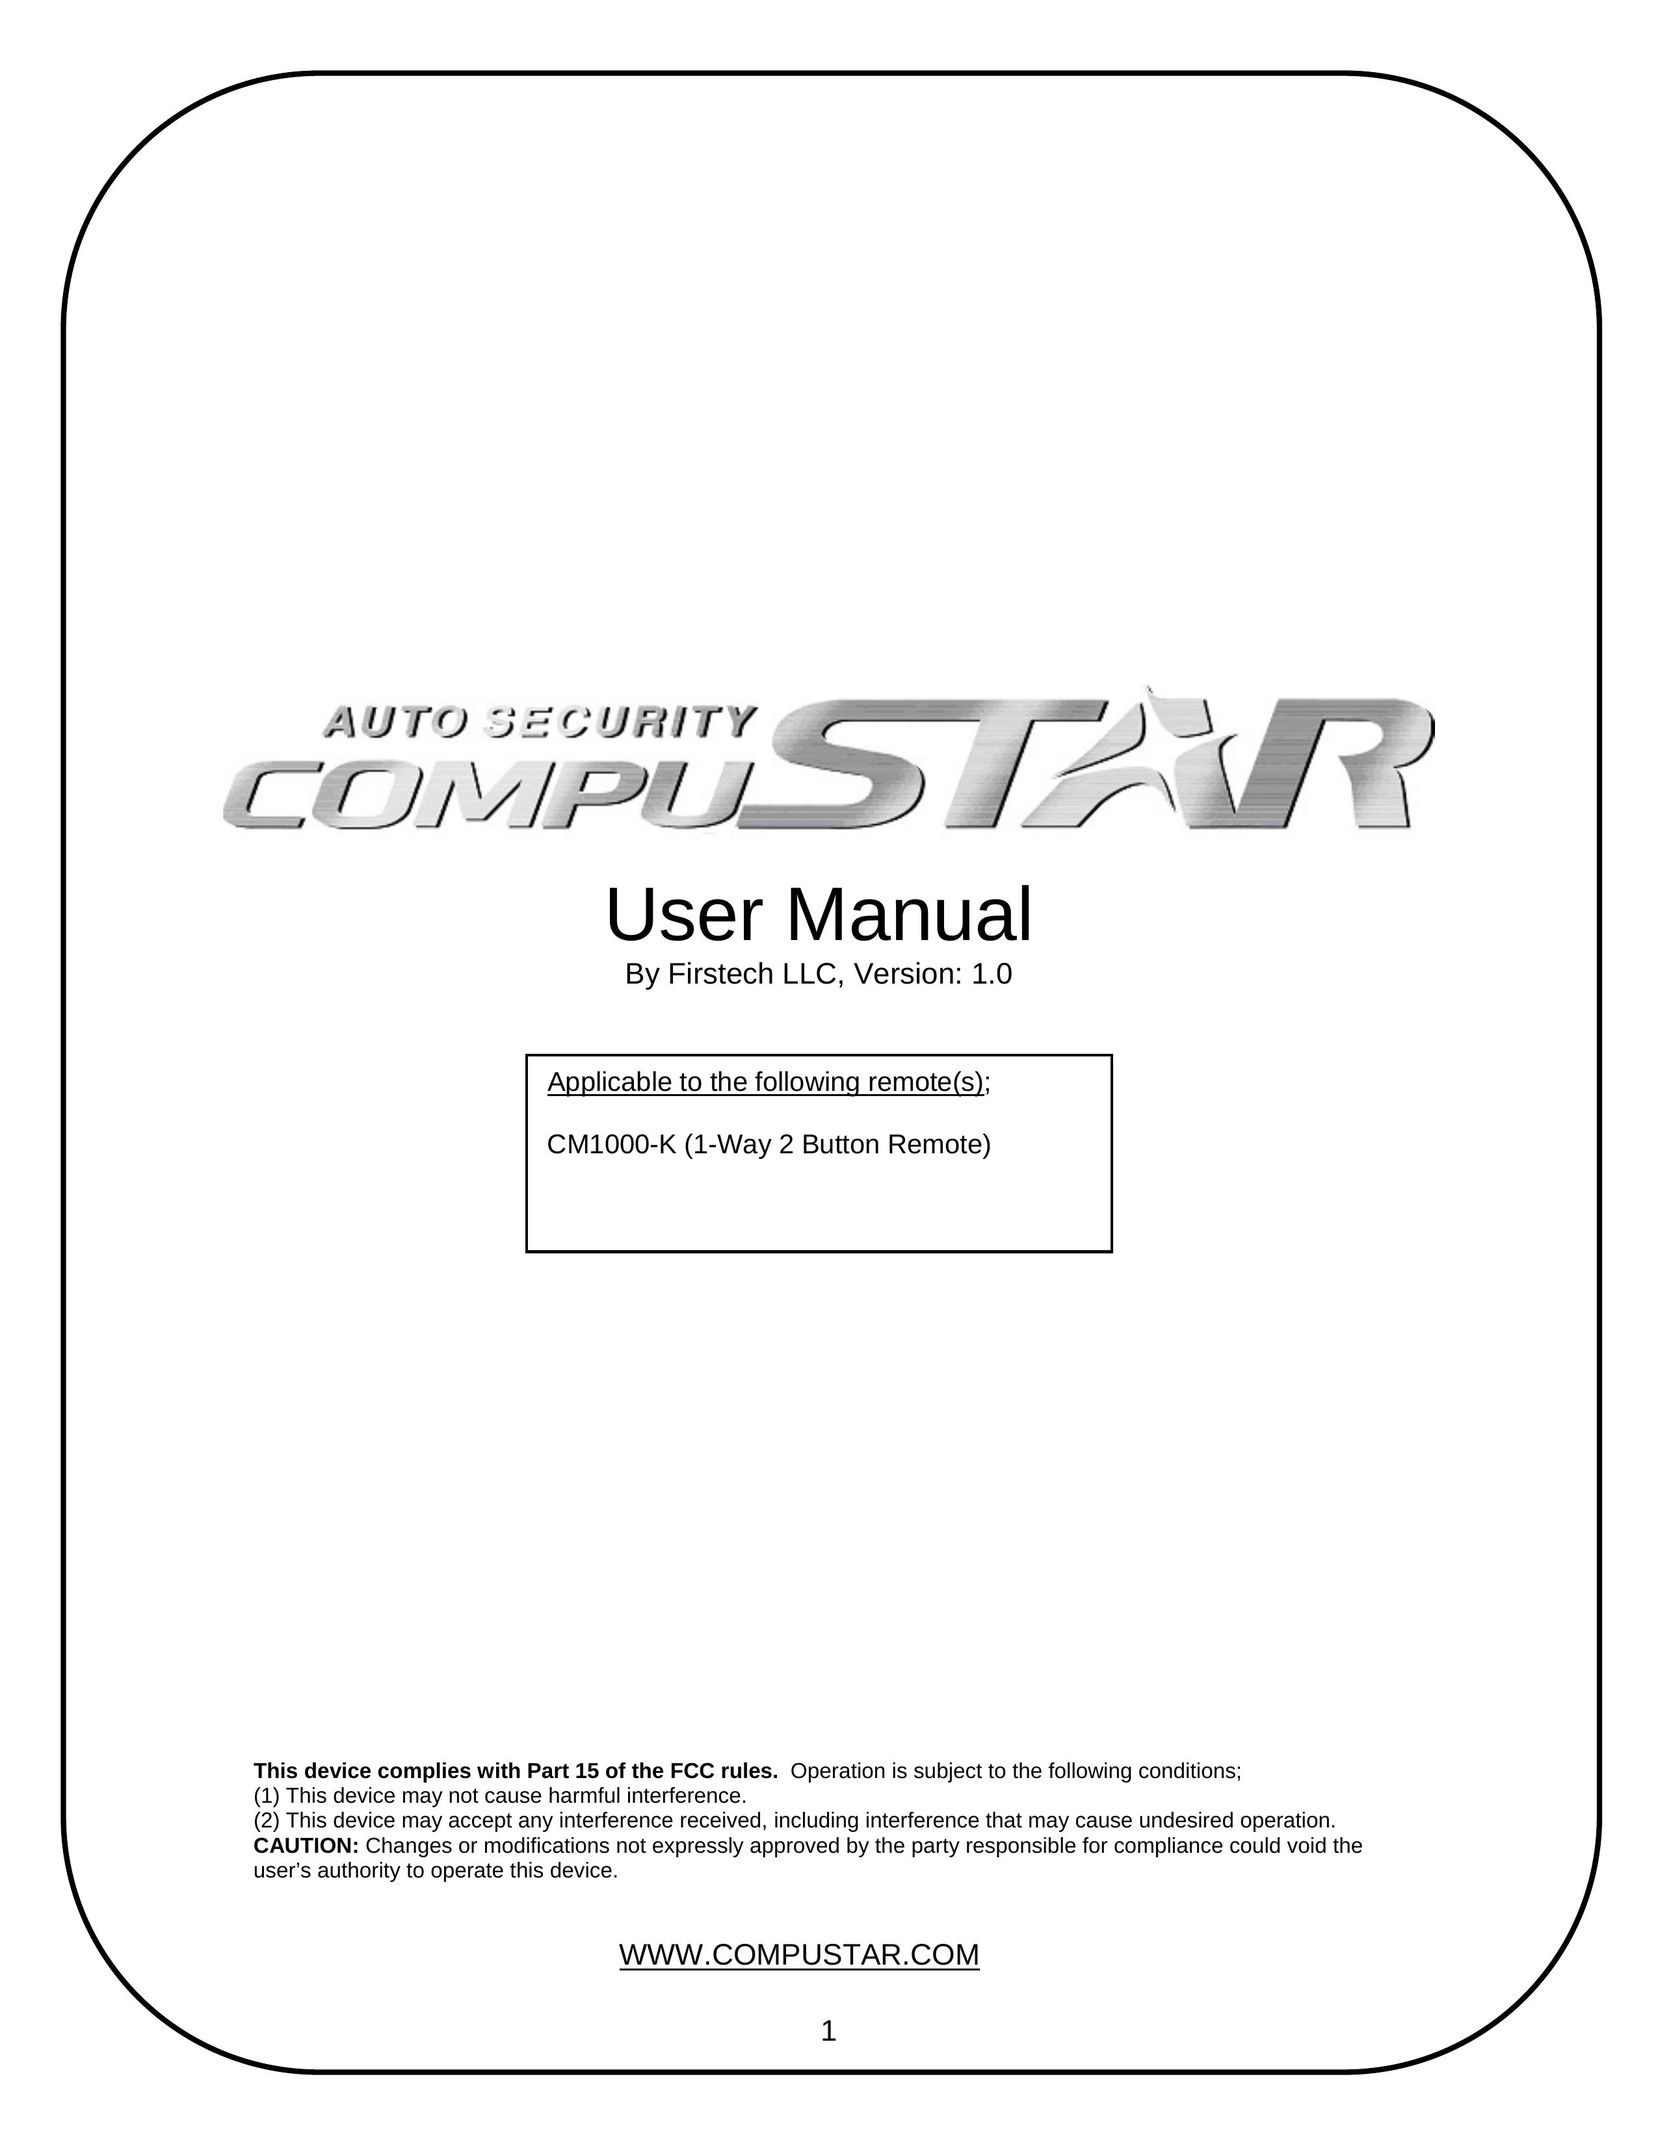 CompuSTAR CM1000-K Home Security System User Manual